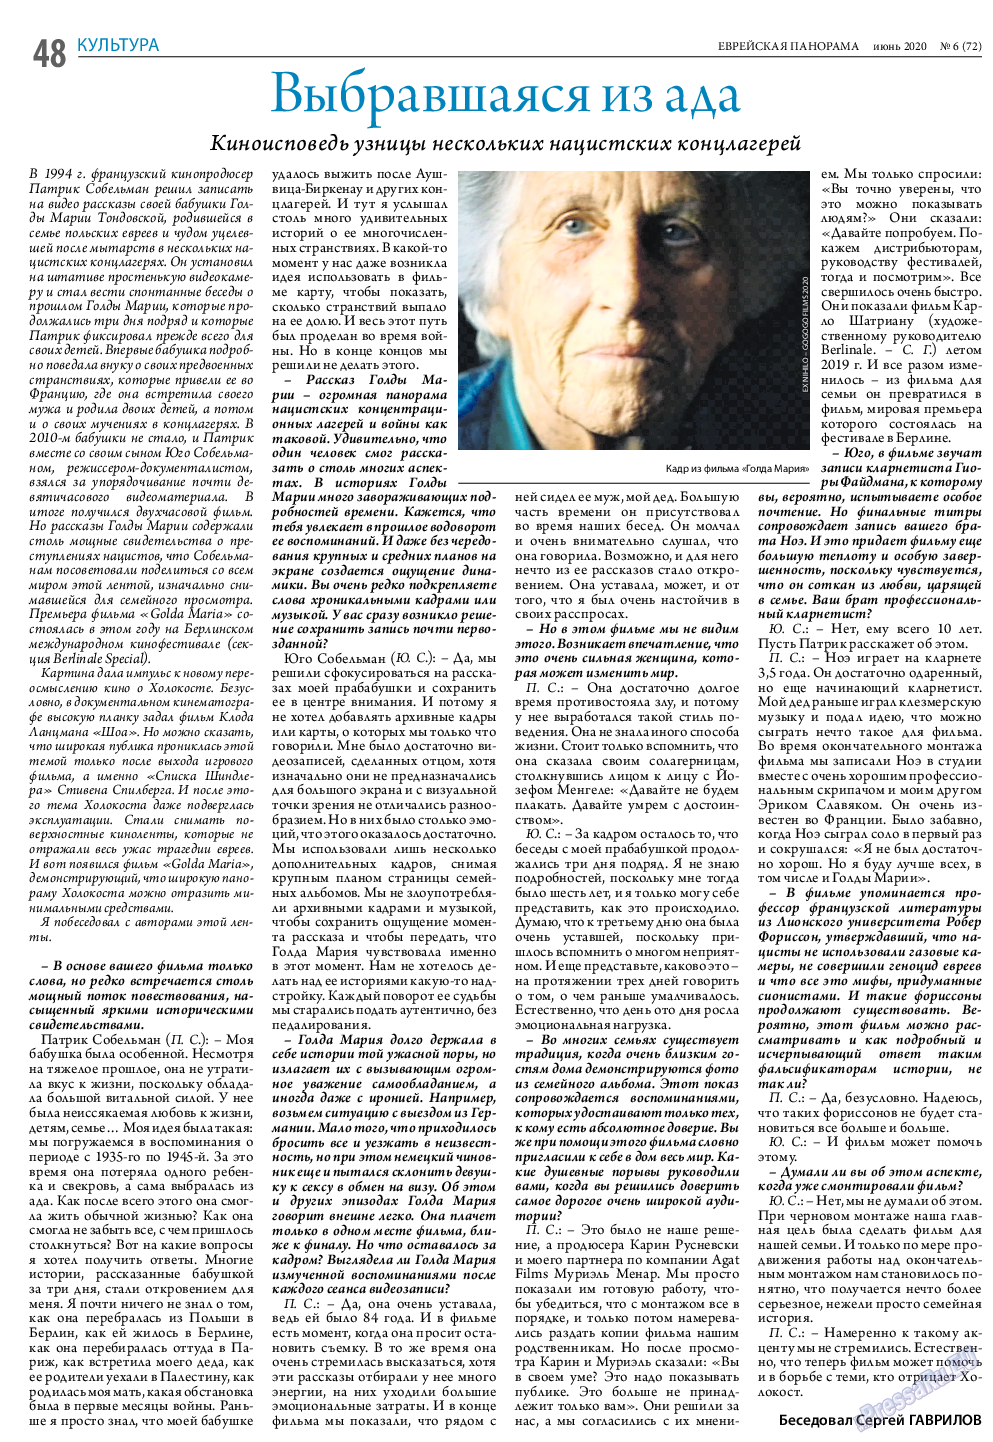 Еврейская панорама, газета. 2020 №6 стр.48